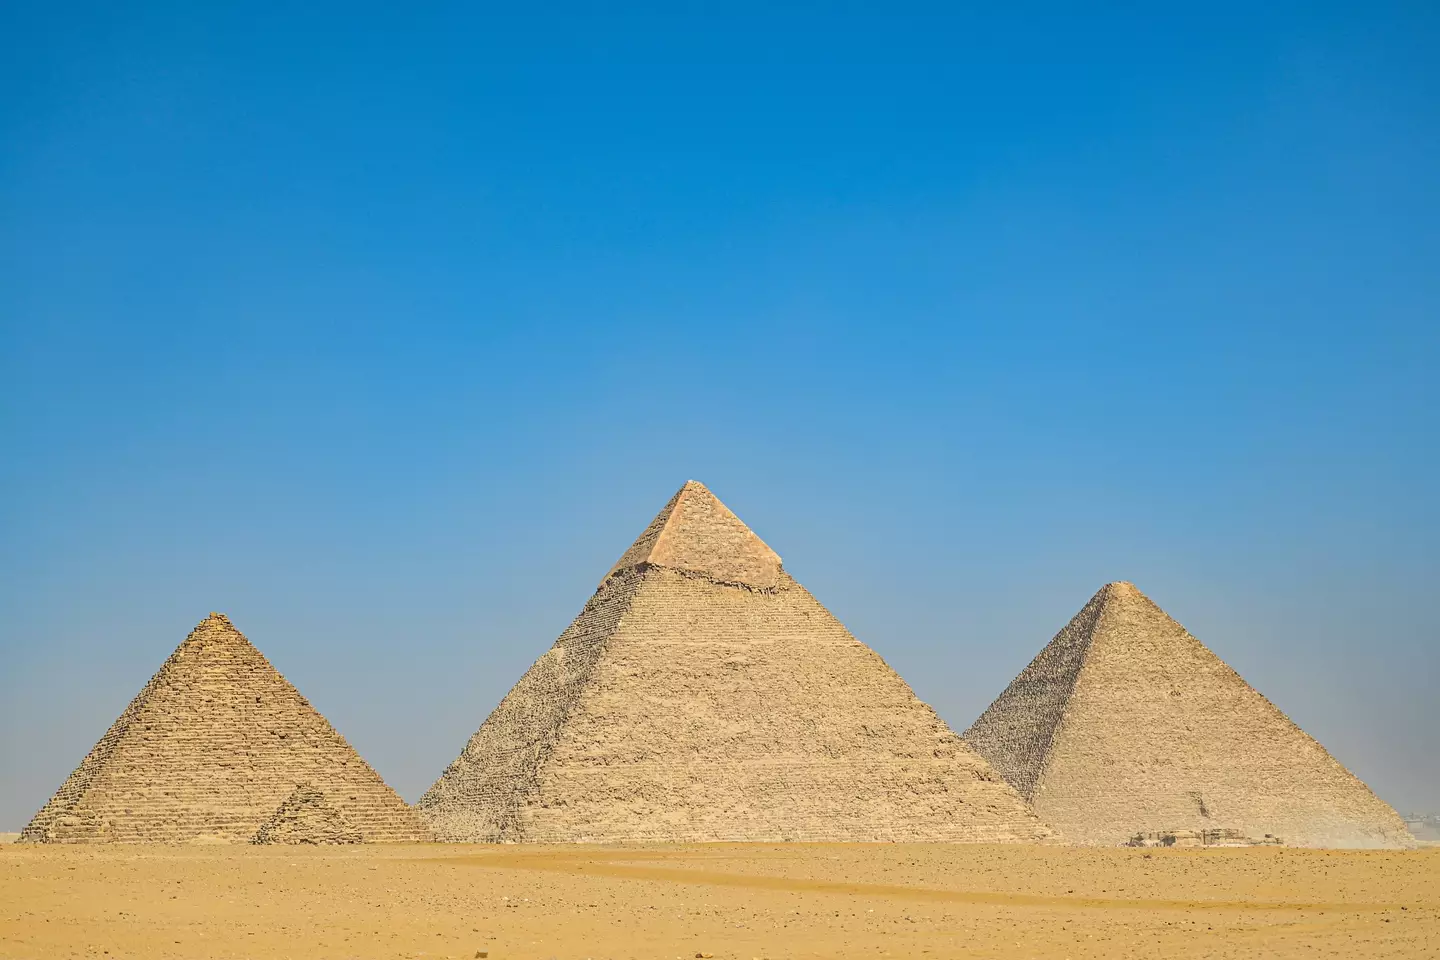 The Pyramids of Giza.